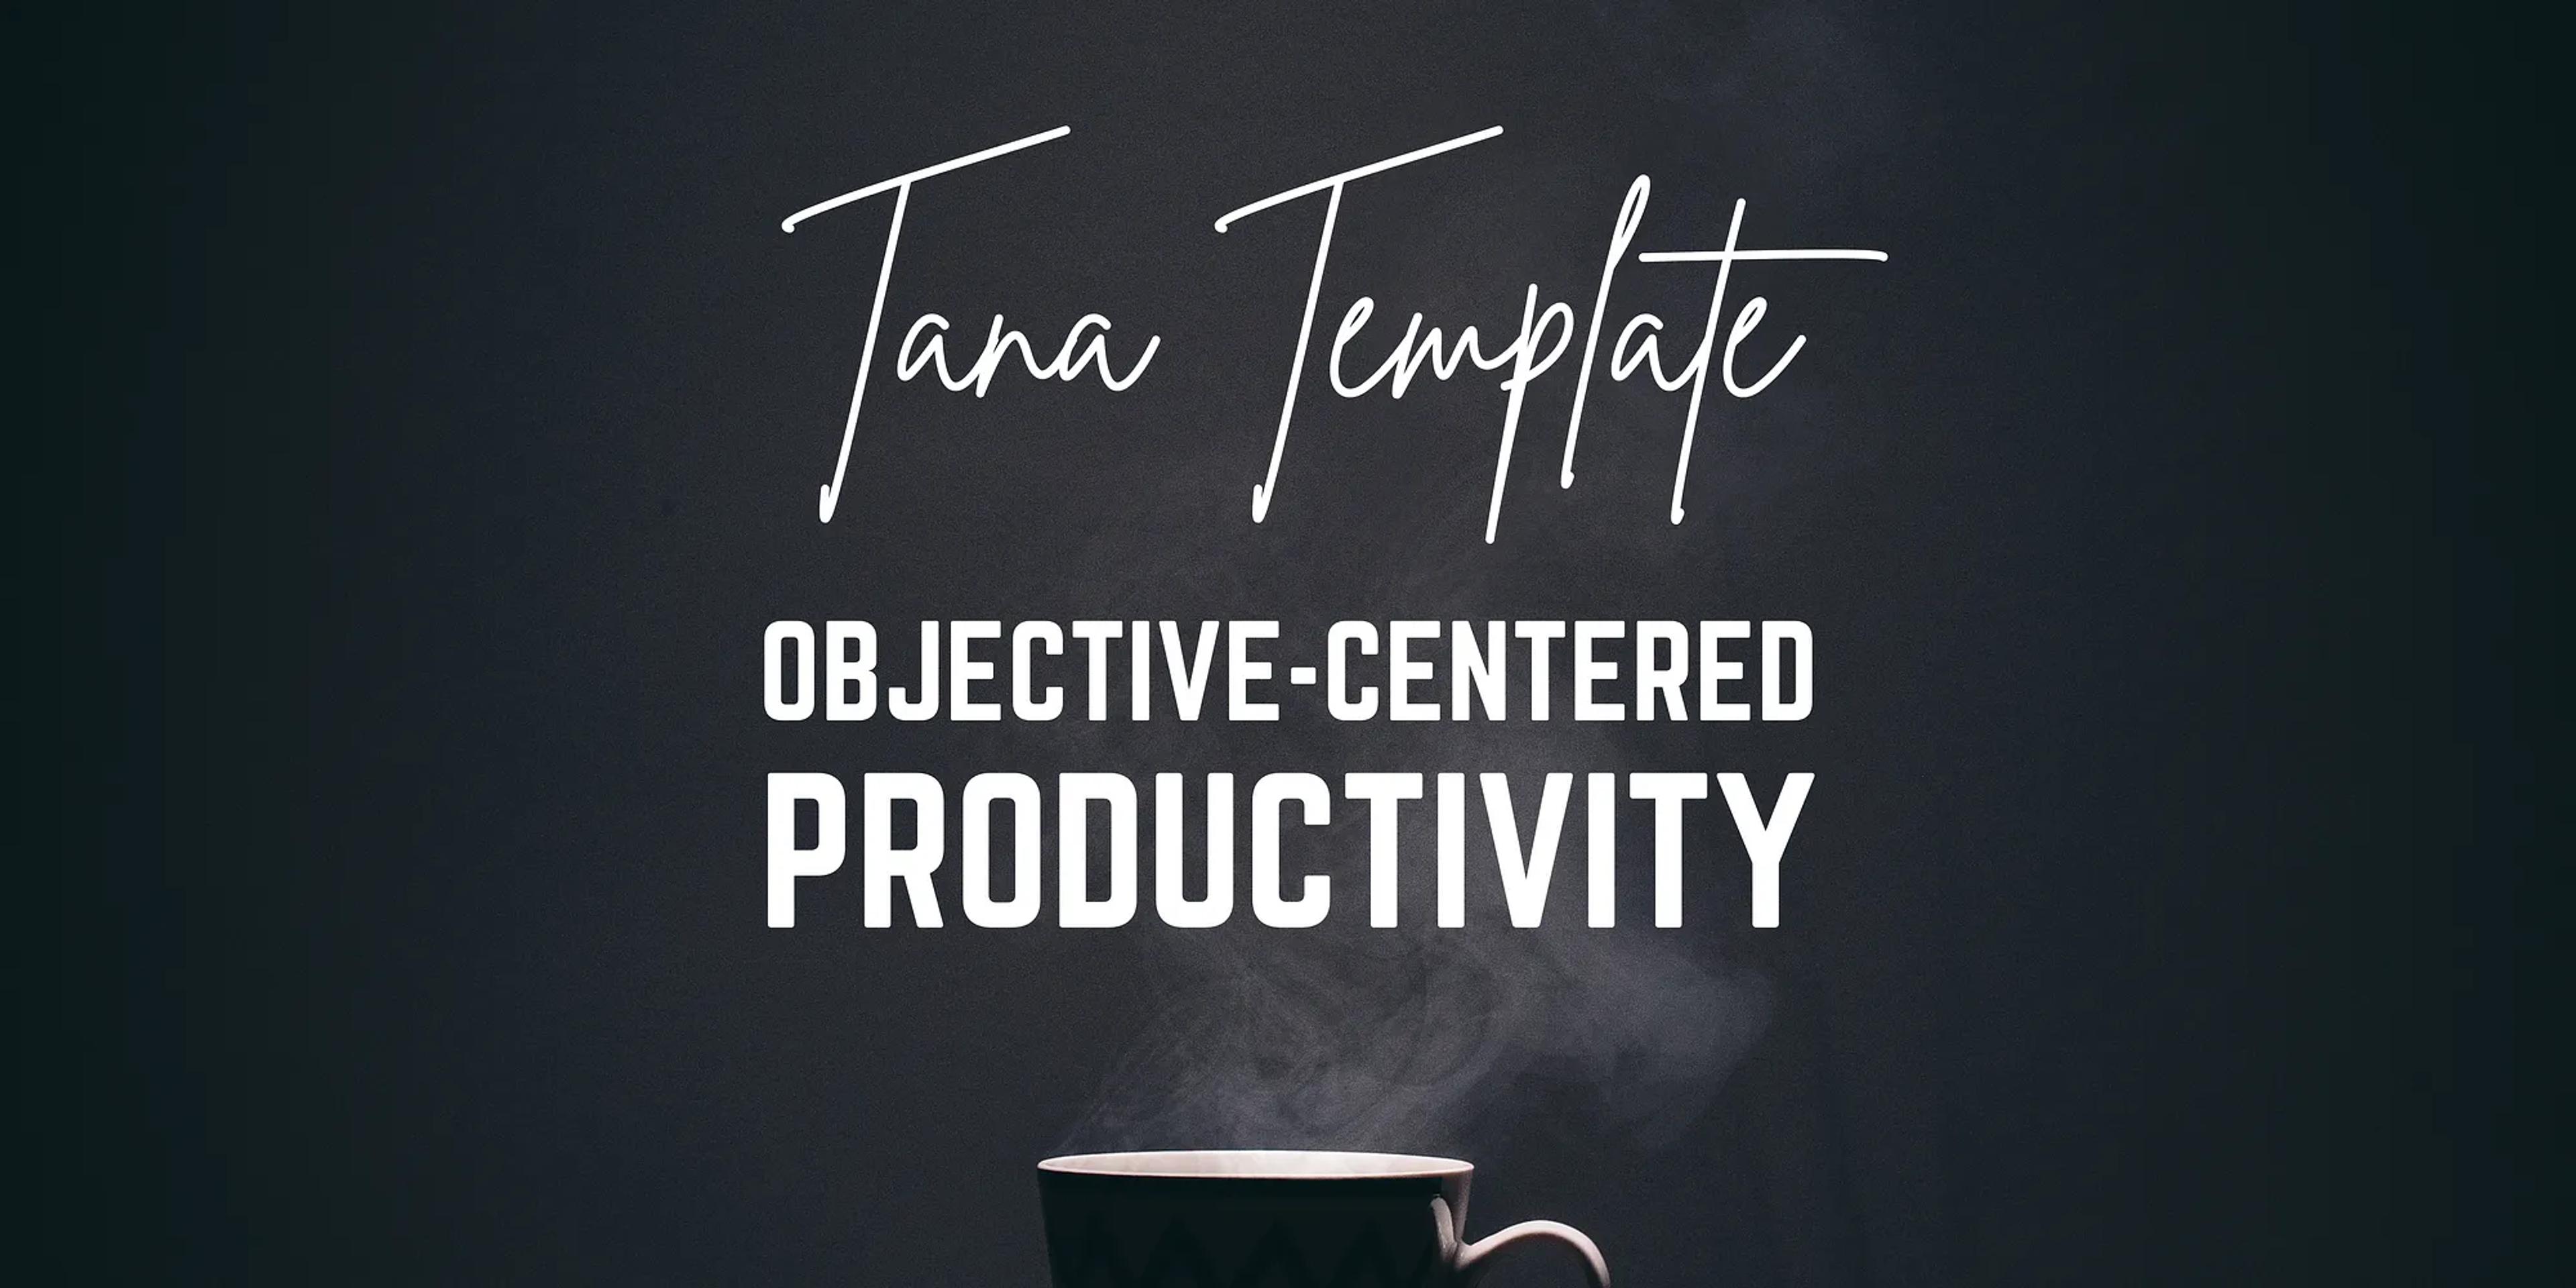 objective-centered productivity